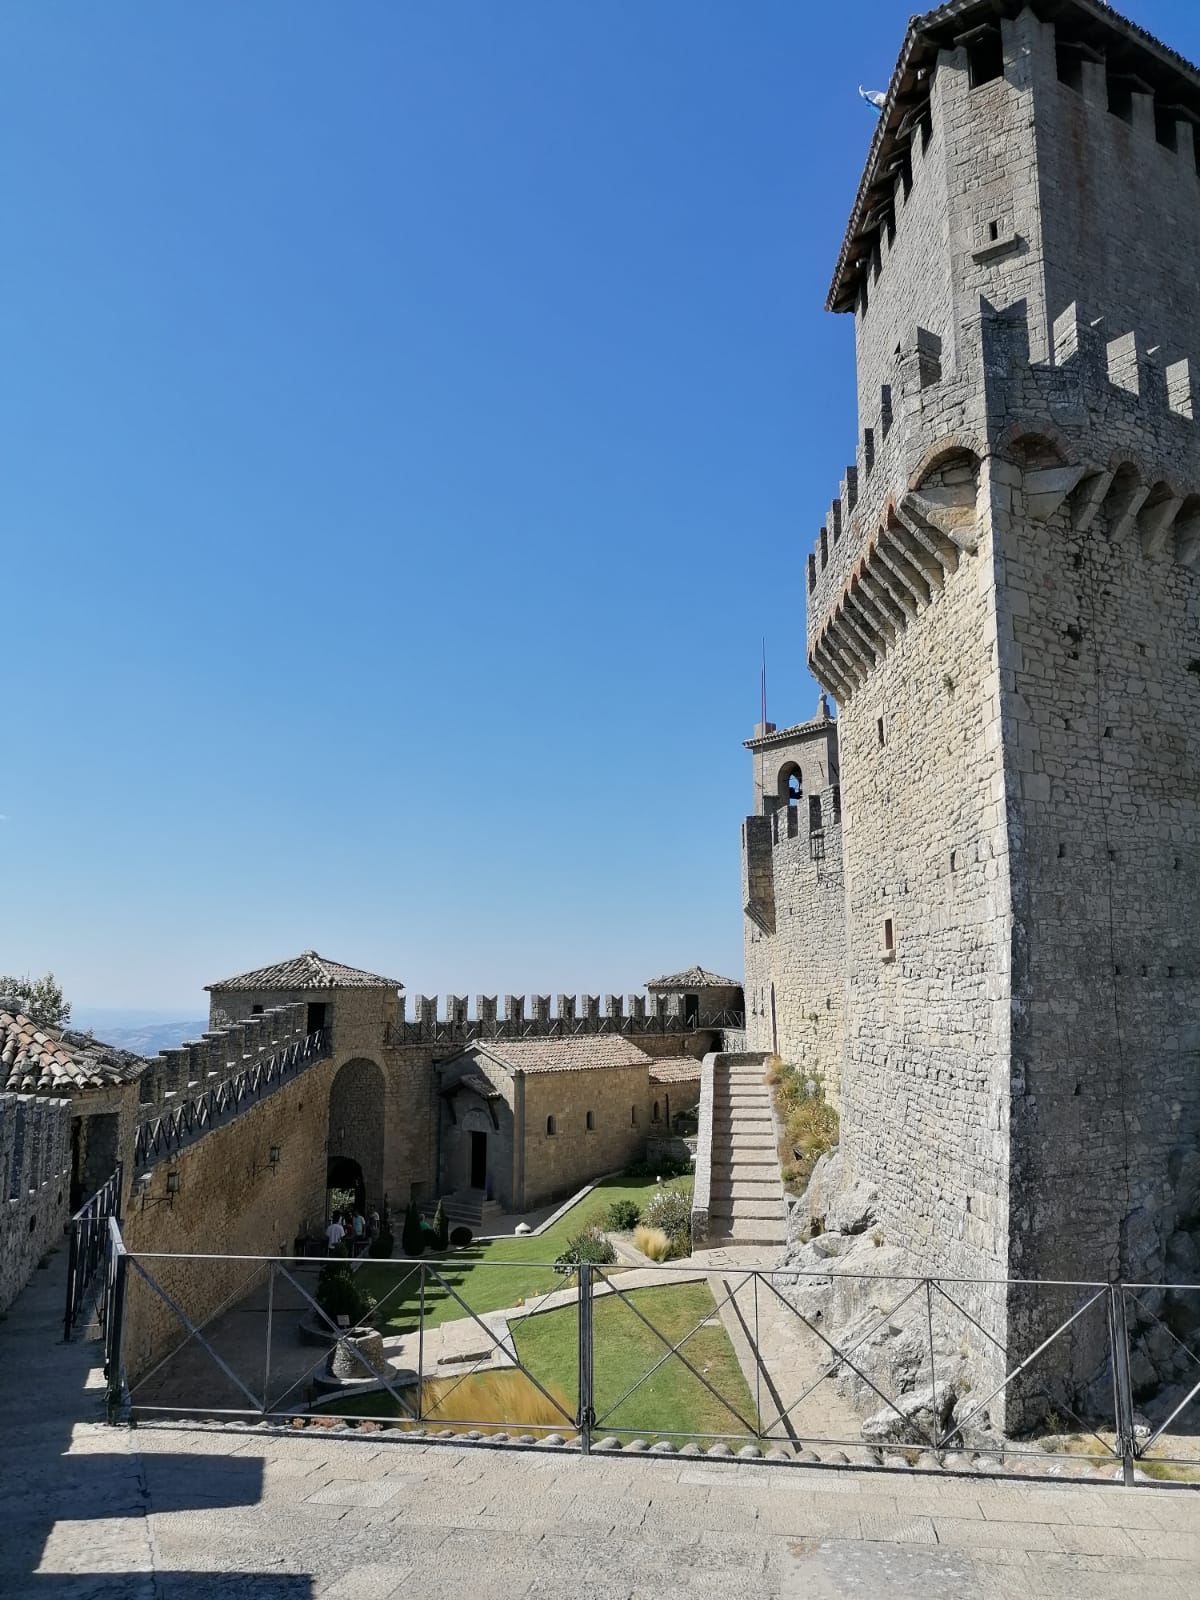 Veduta di San Marino